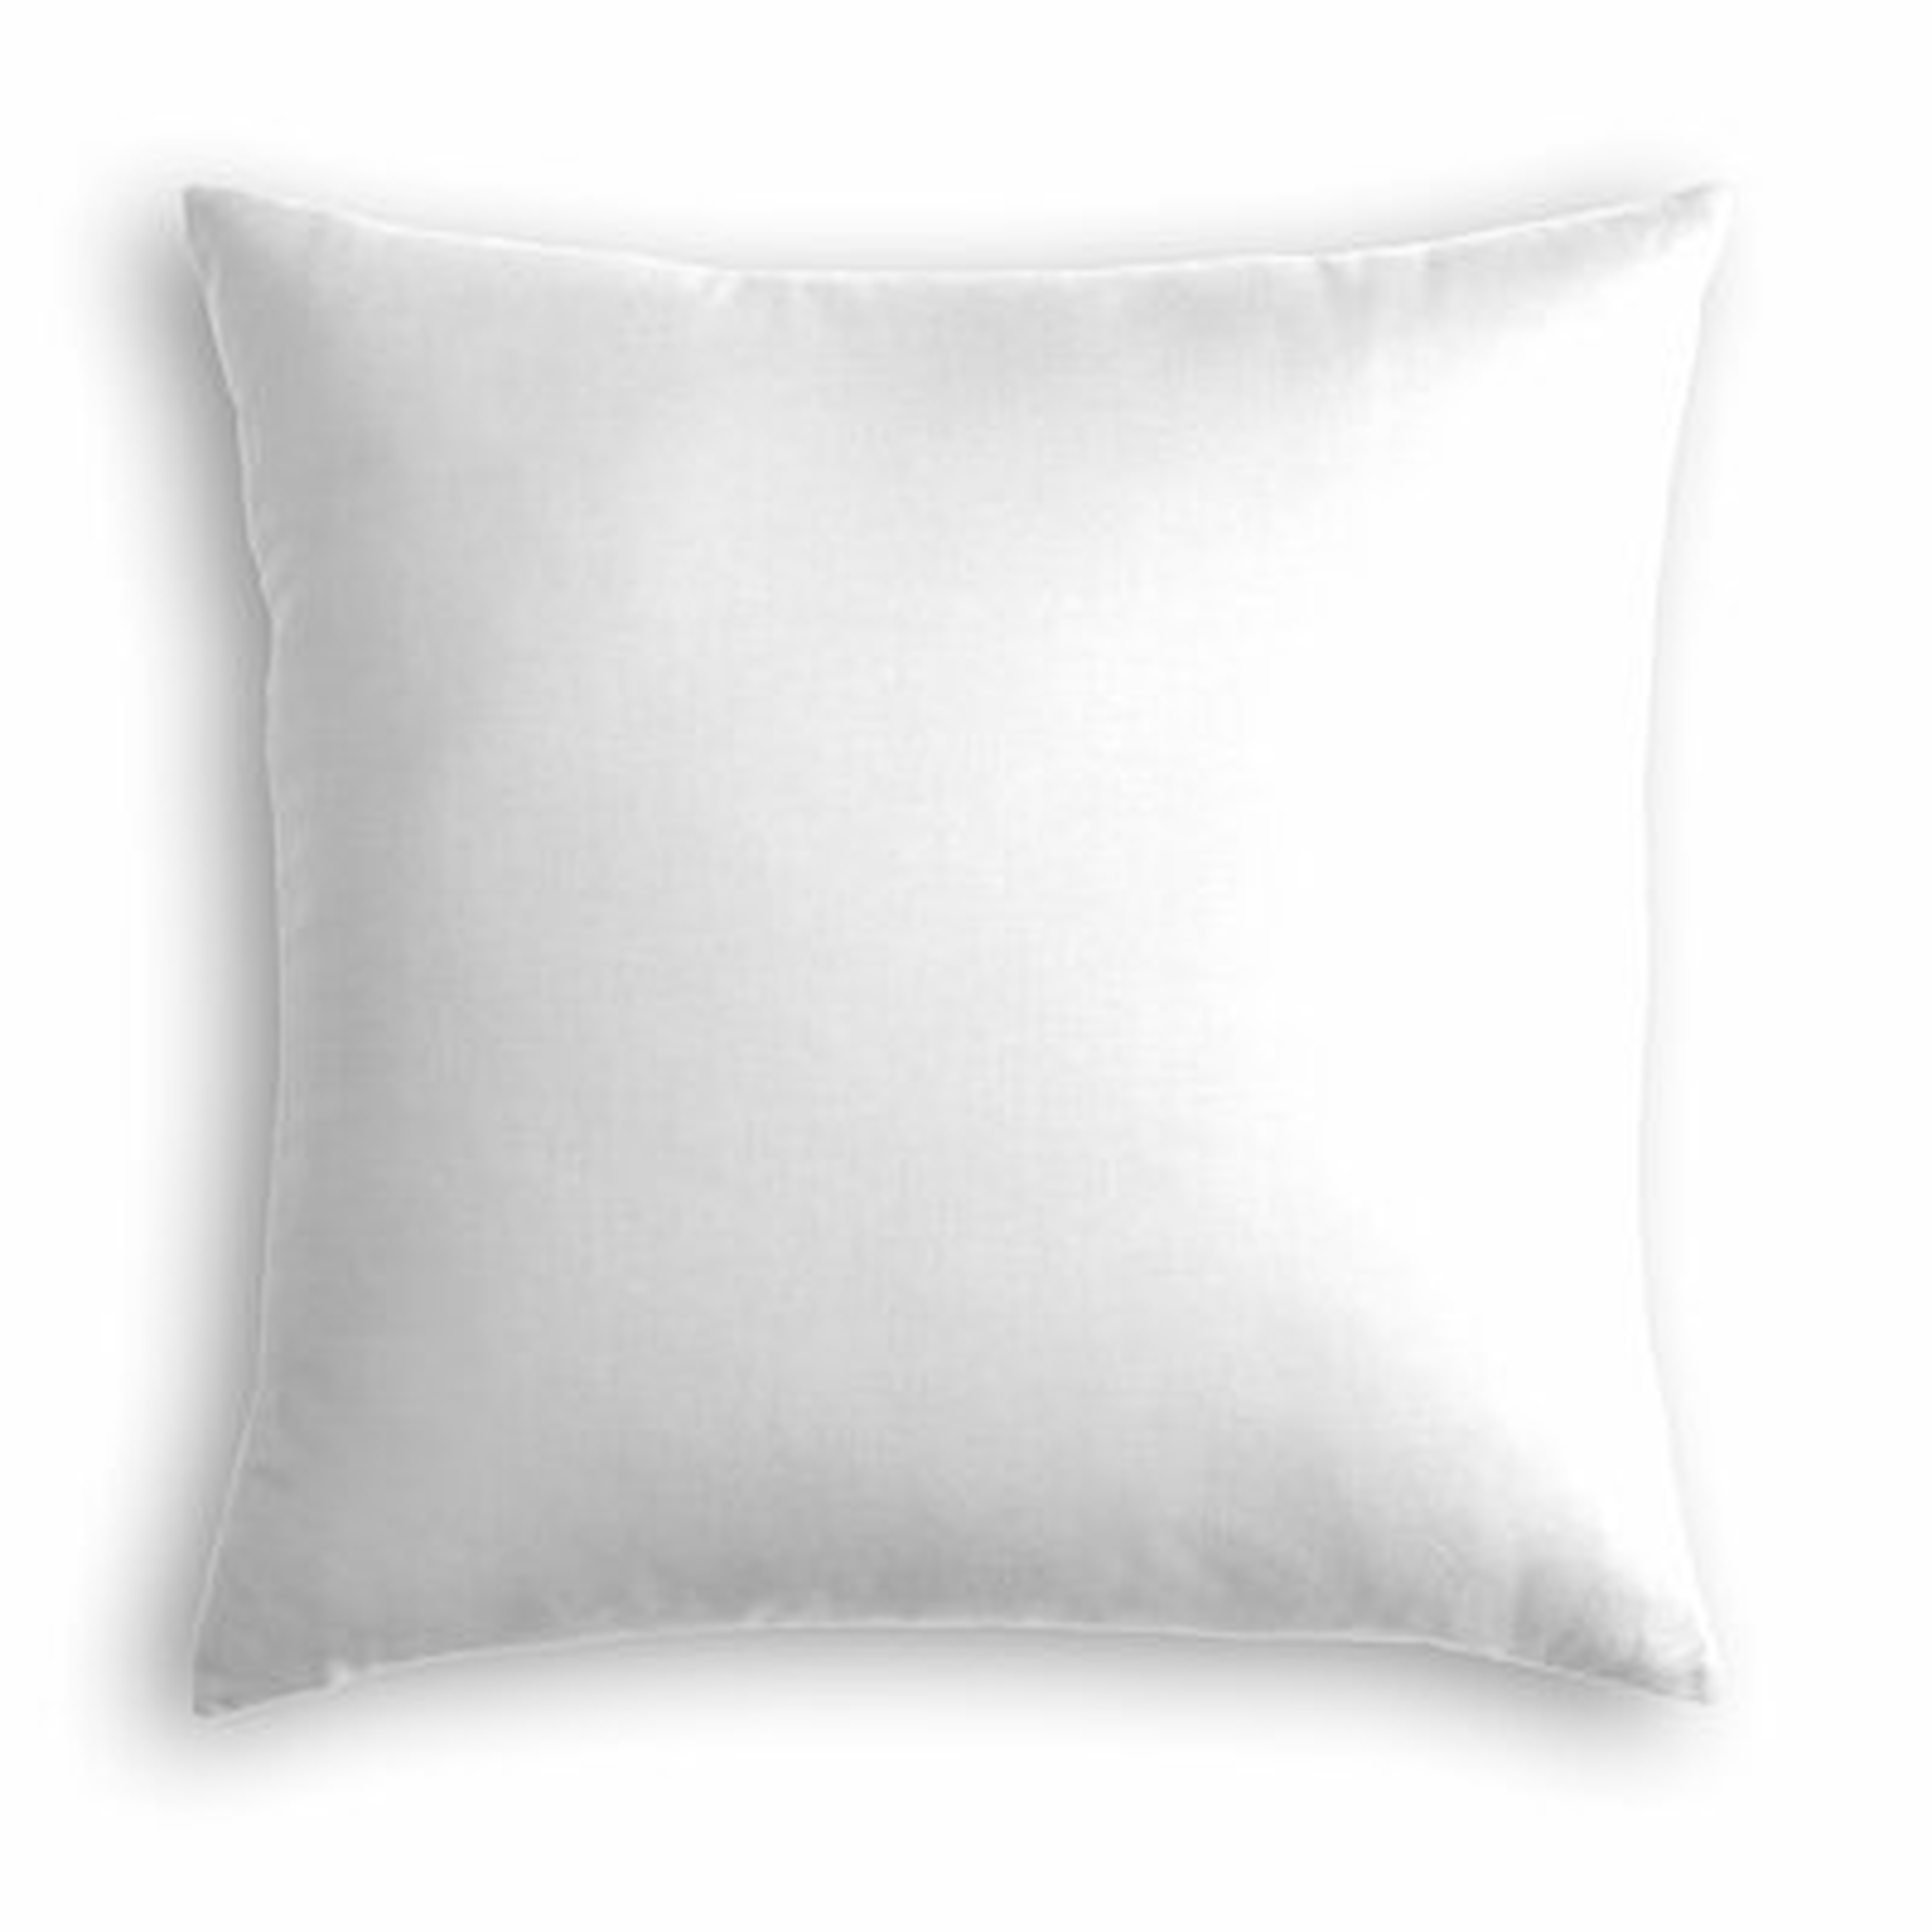 Aemilia Square Pillow Cover & Insert, White Linen, 24" x 24" - Wayfair